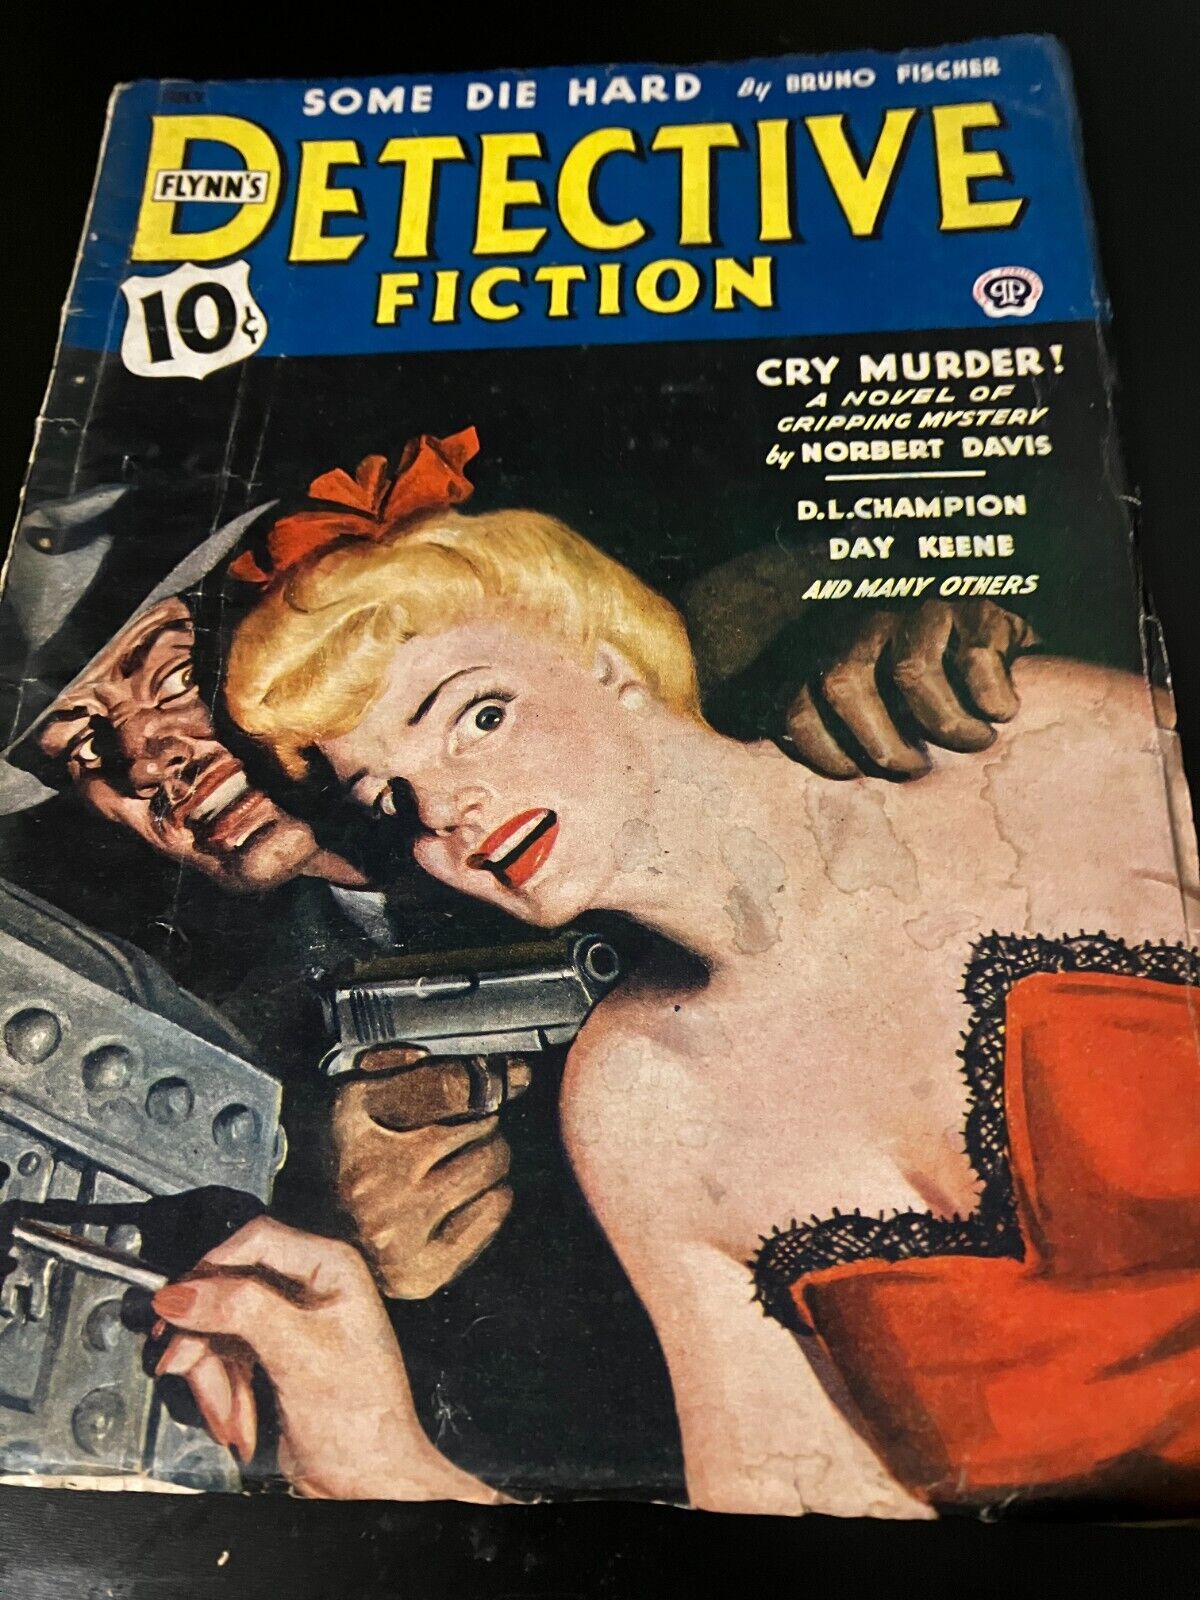 Flynn's Detective Fiction Crime Pulp July 1944